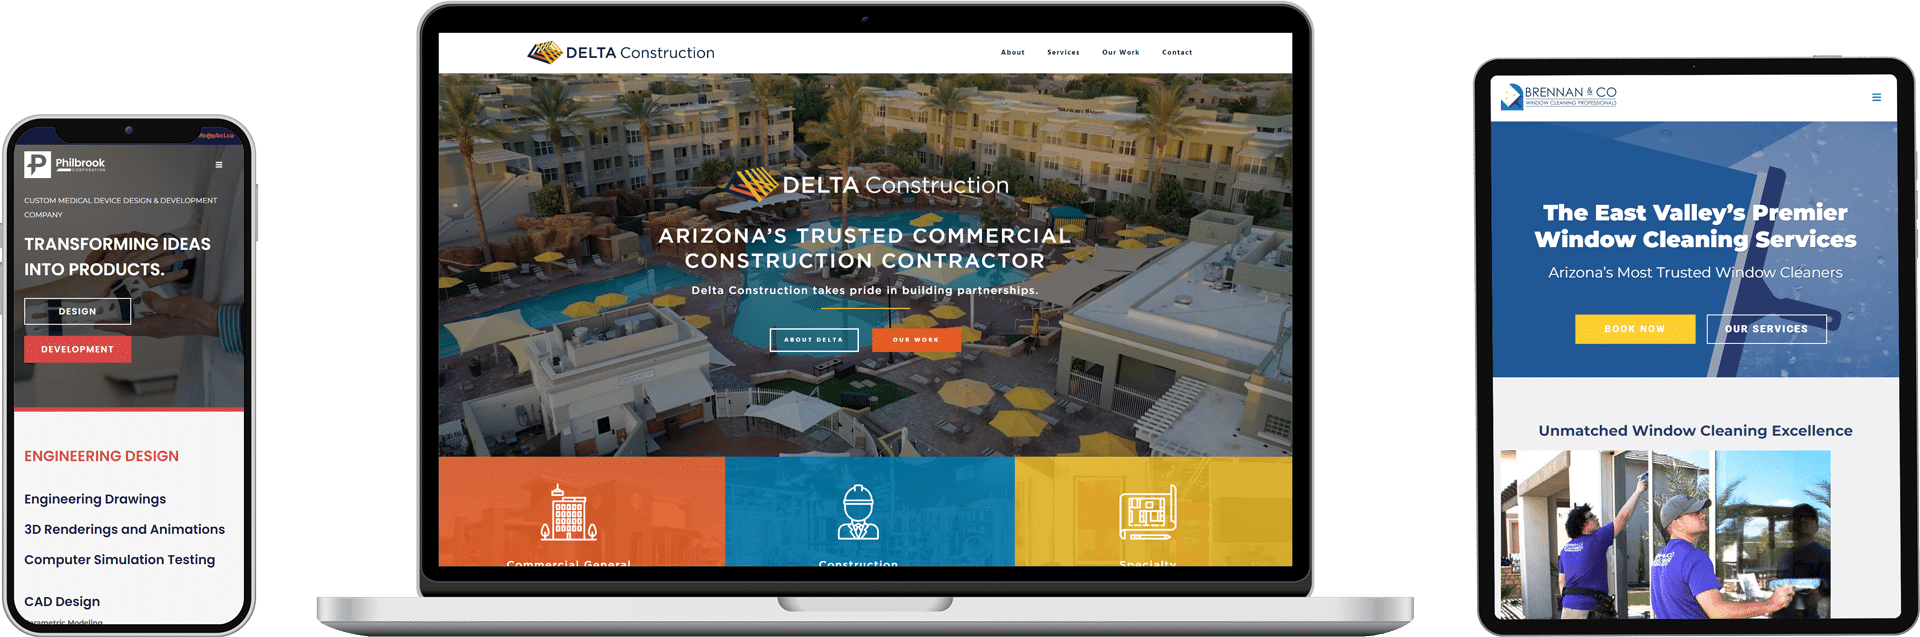 web design peoria az customer website